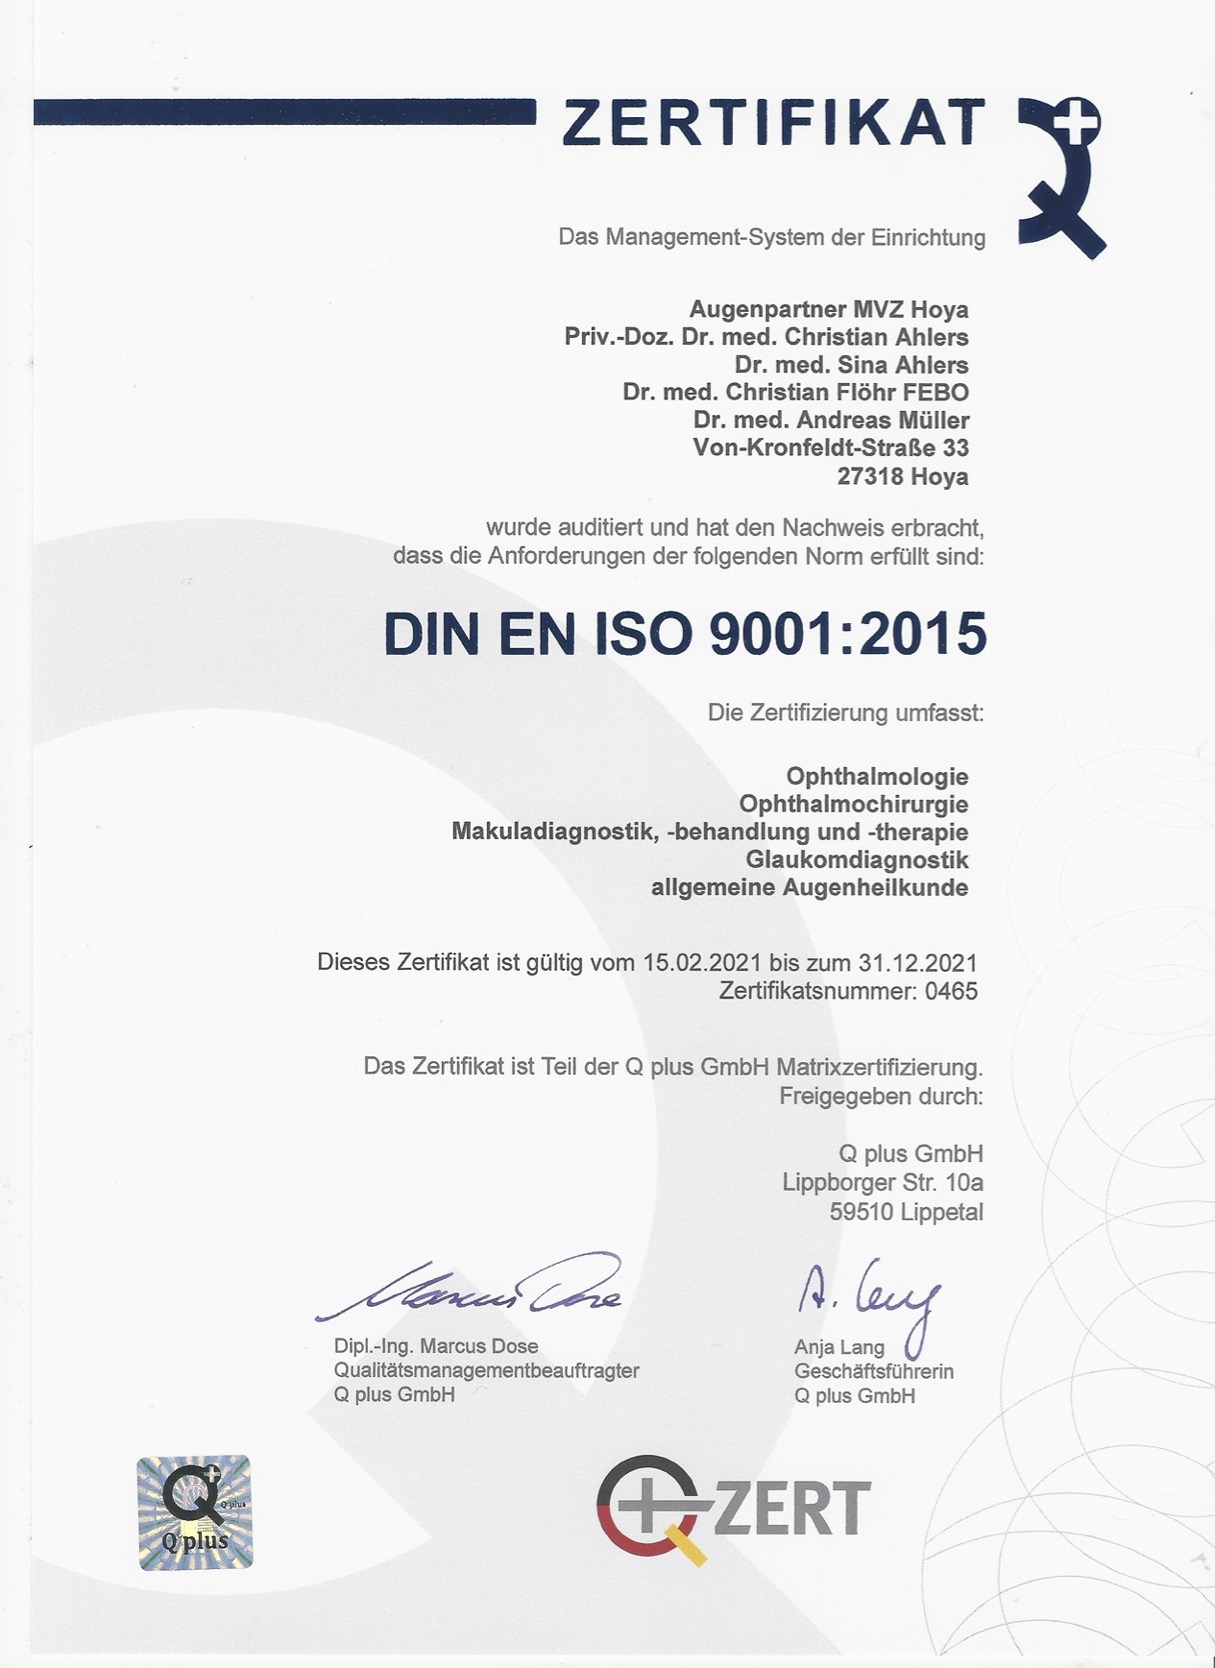 Zertifikat der Augenpartner Hoya über DIN ISO 9001